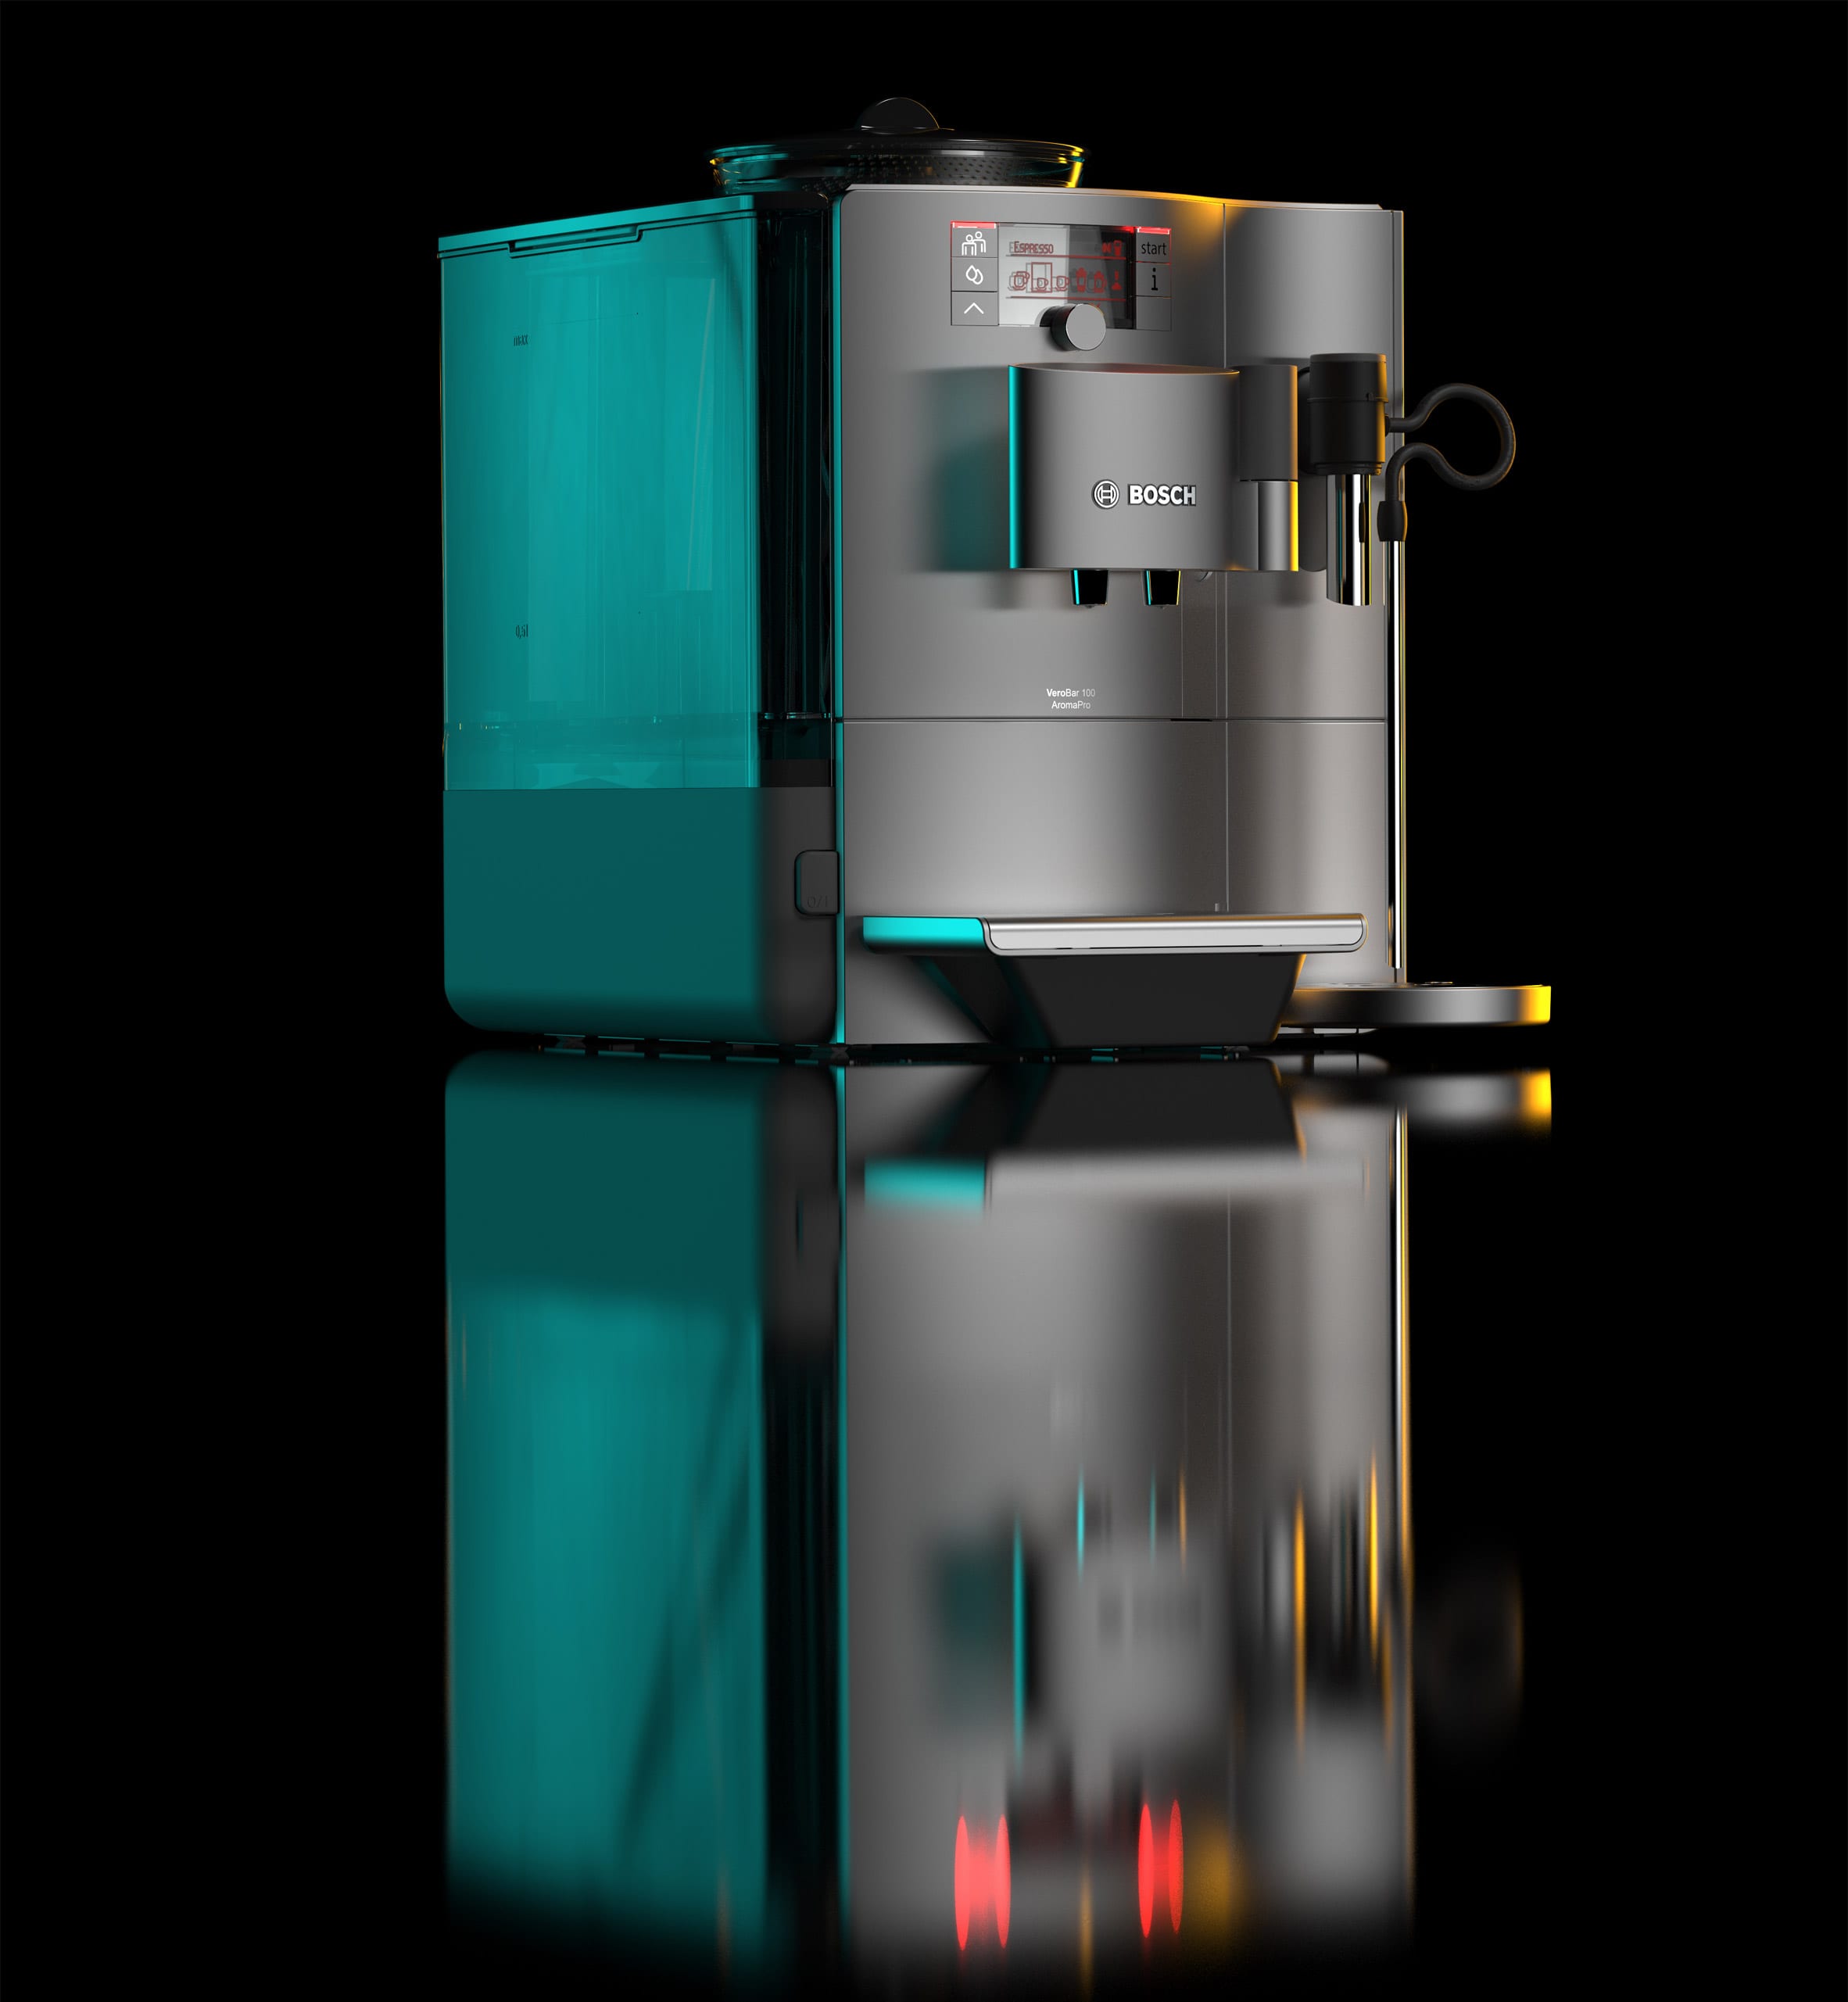 A render of a Bosch coffee machine